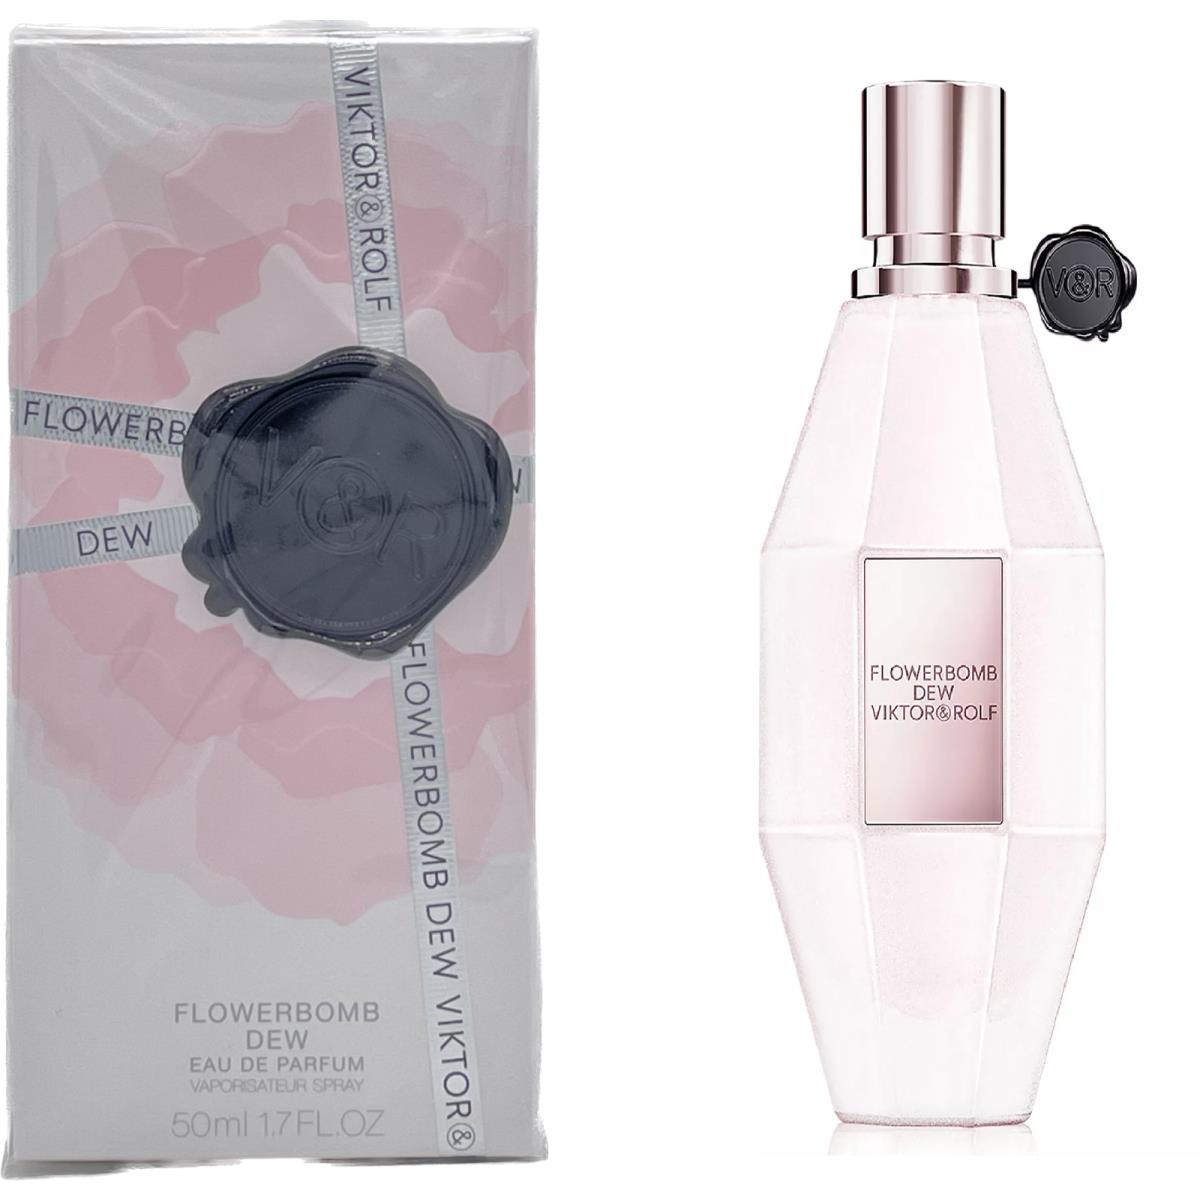 Viktor Rolf Flowerbomb Dew For Women 1.7 oz Eau de Parfum Spray